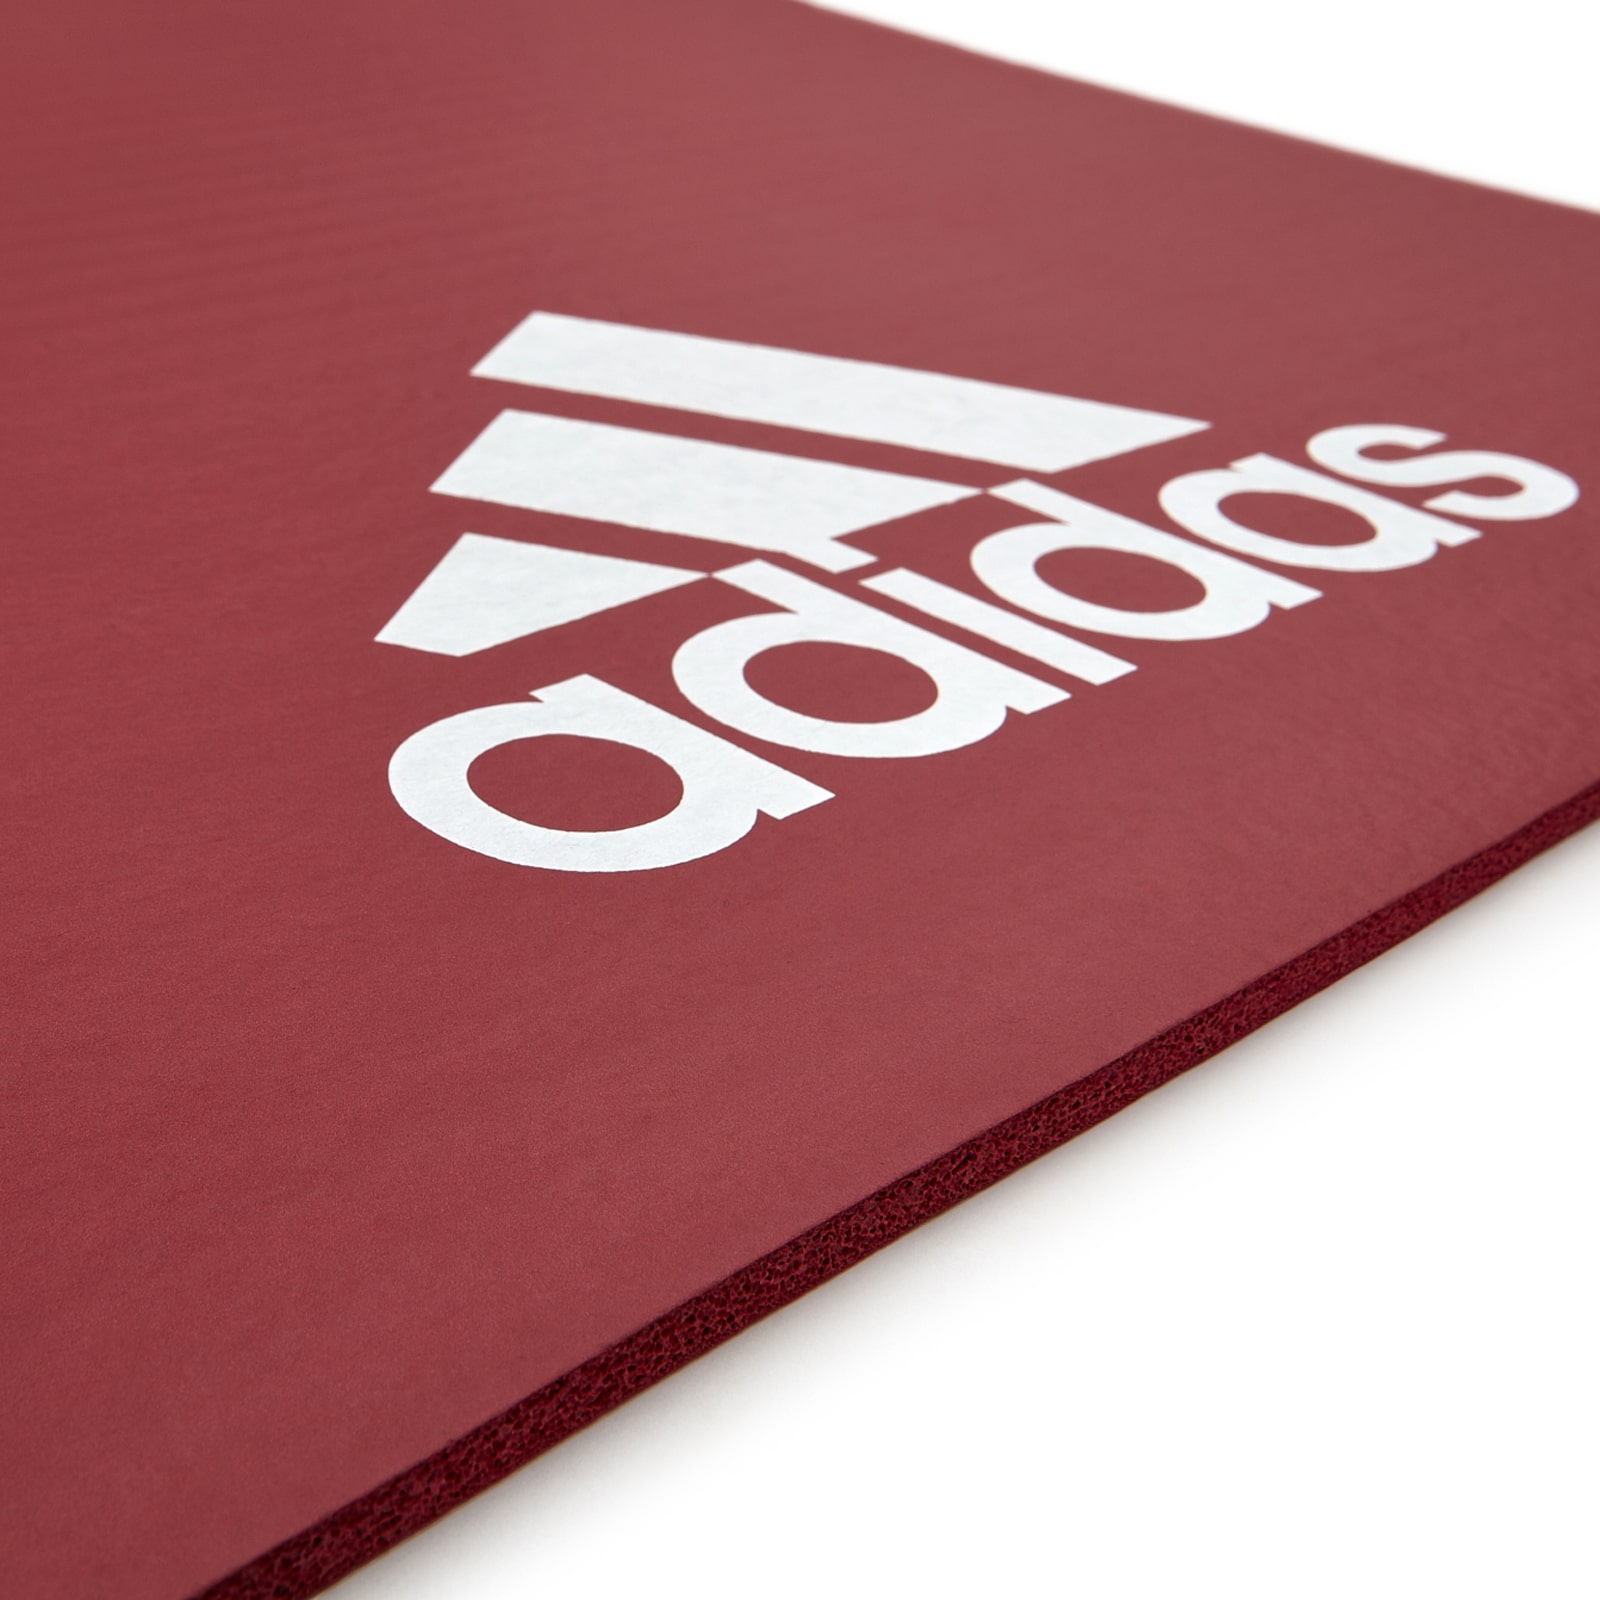 фото Коврик для фитнеса adidas admt-11014 red 173 см, 7 мм